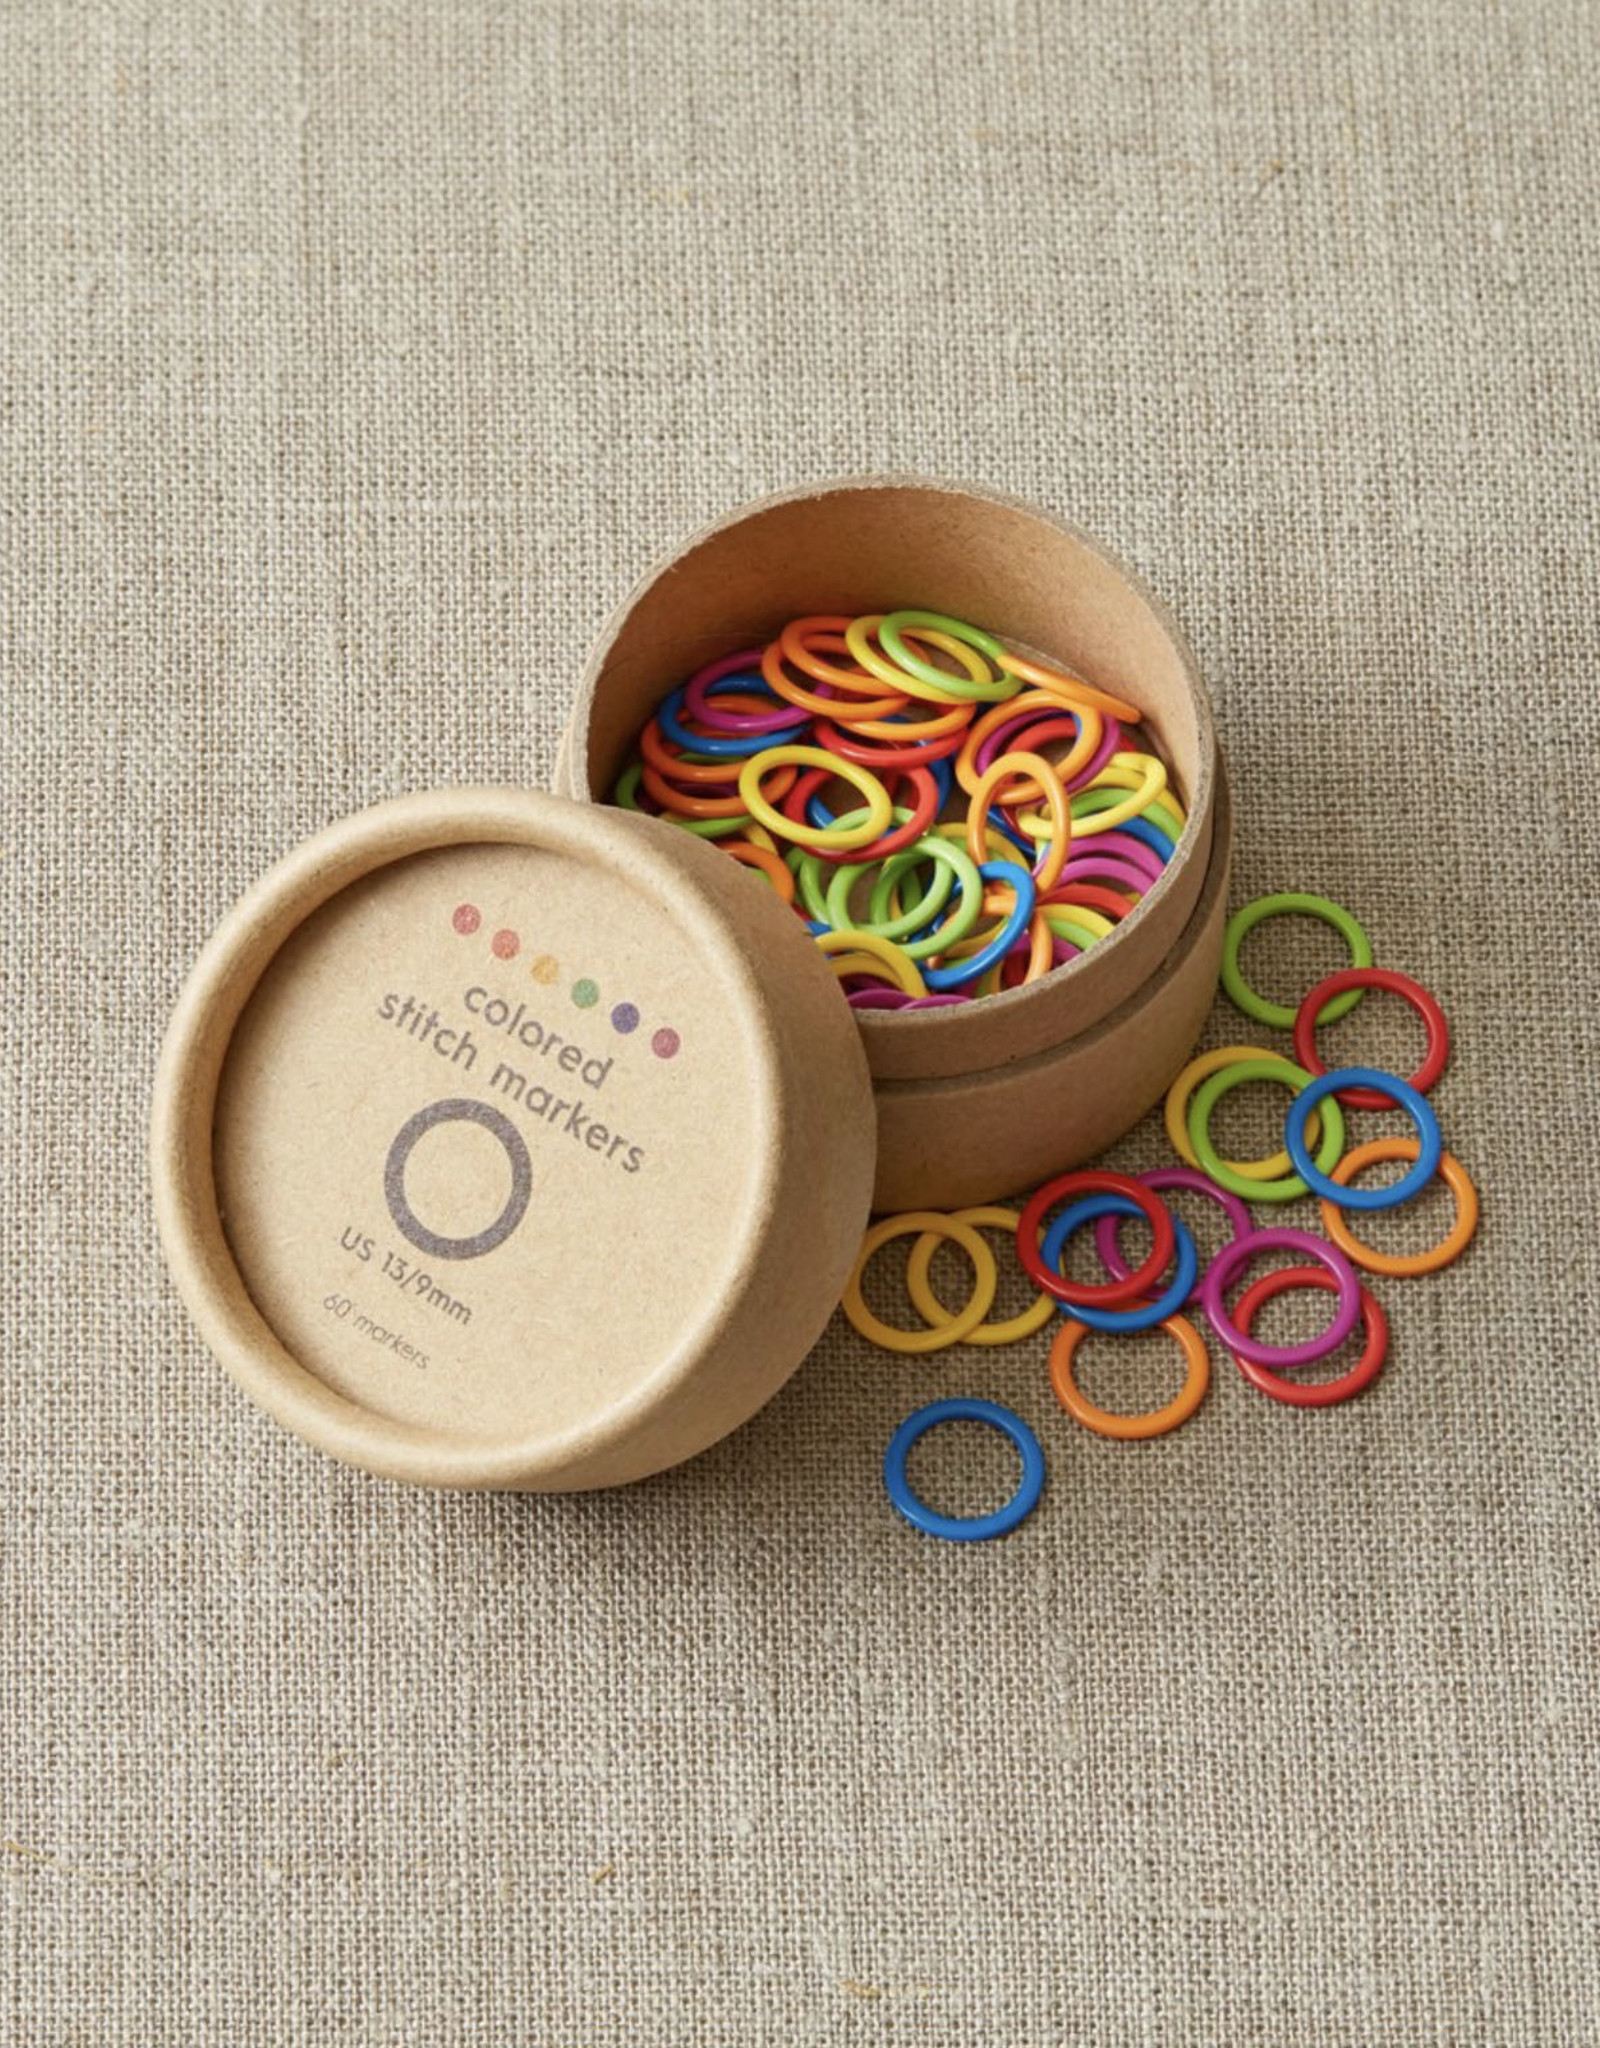 Cocoknits Colorful Stitch Marker Set